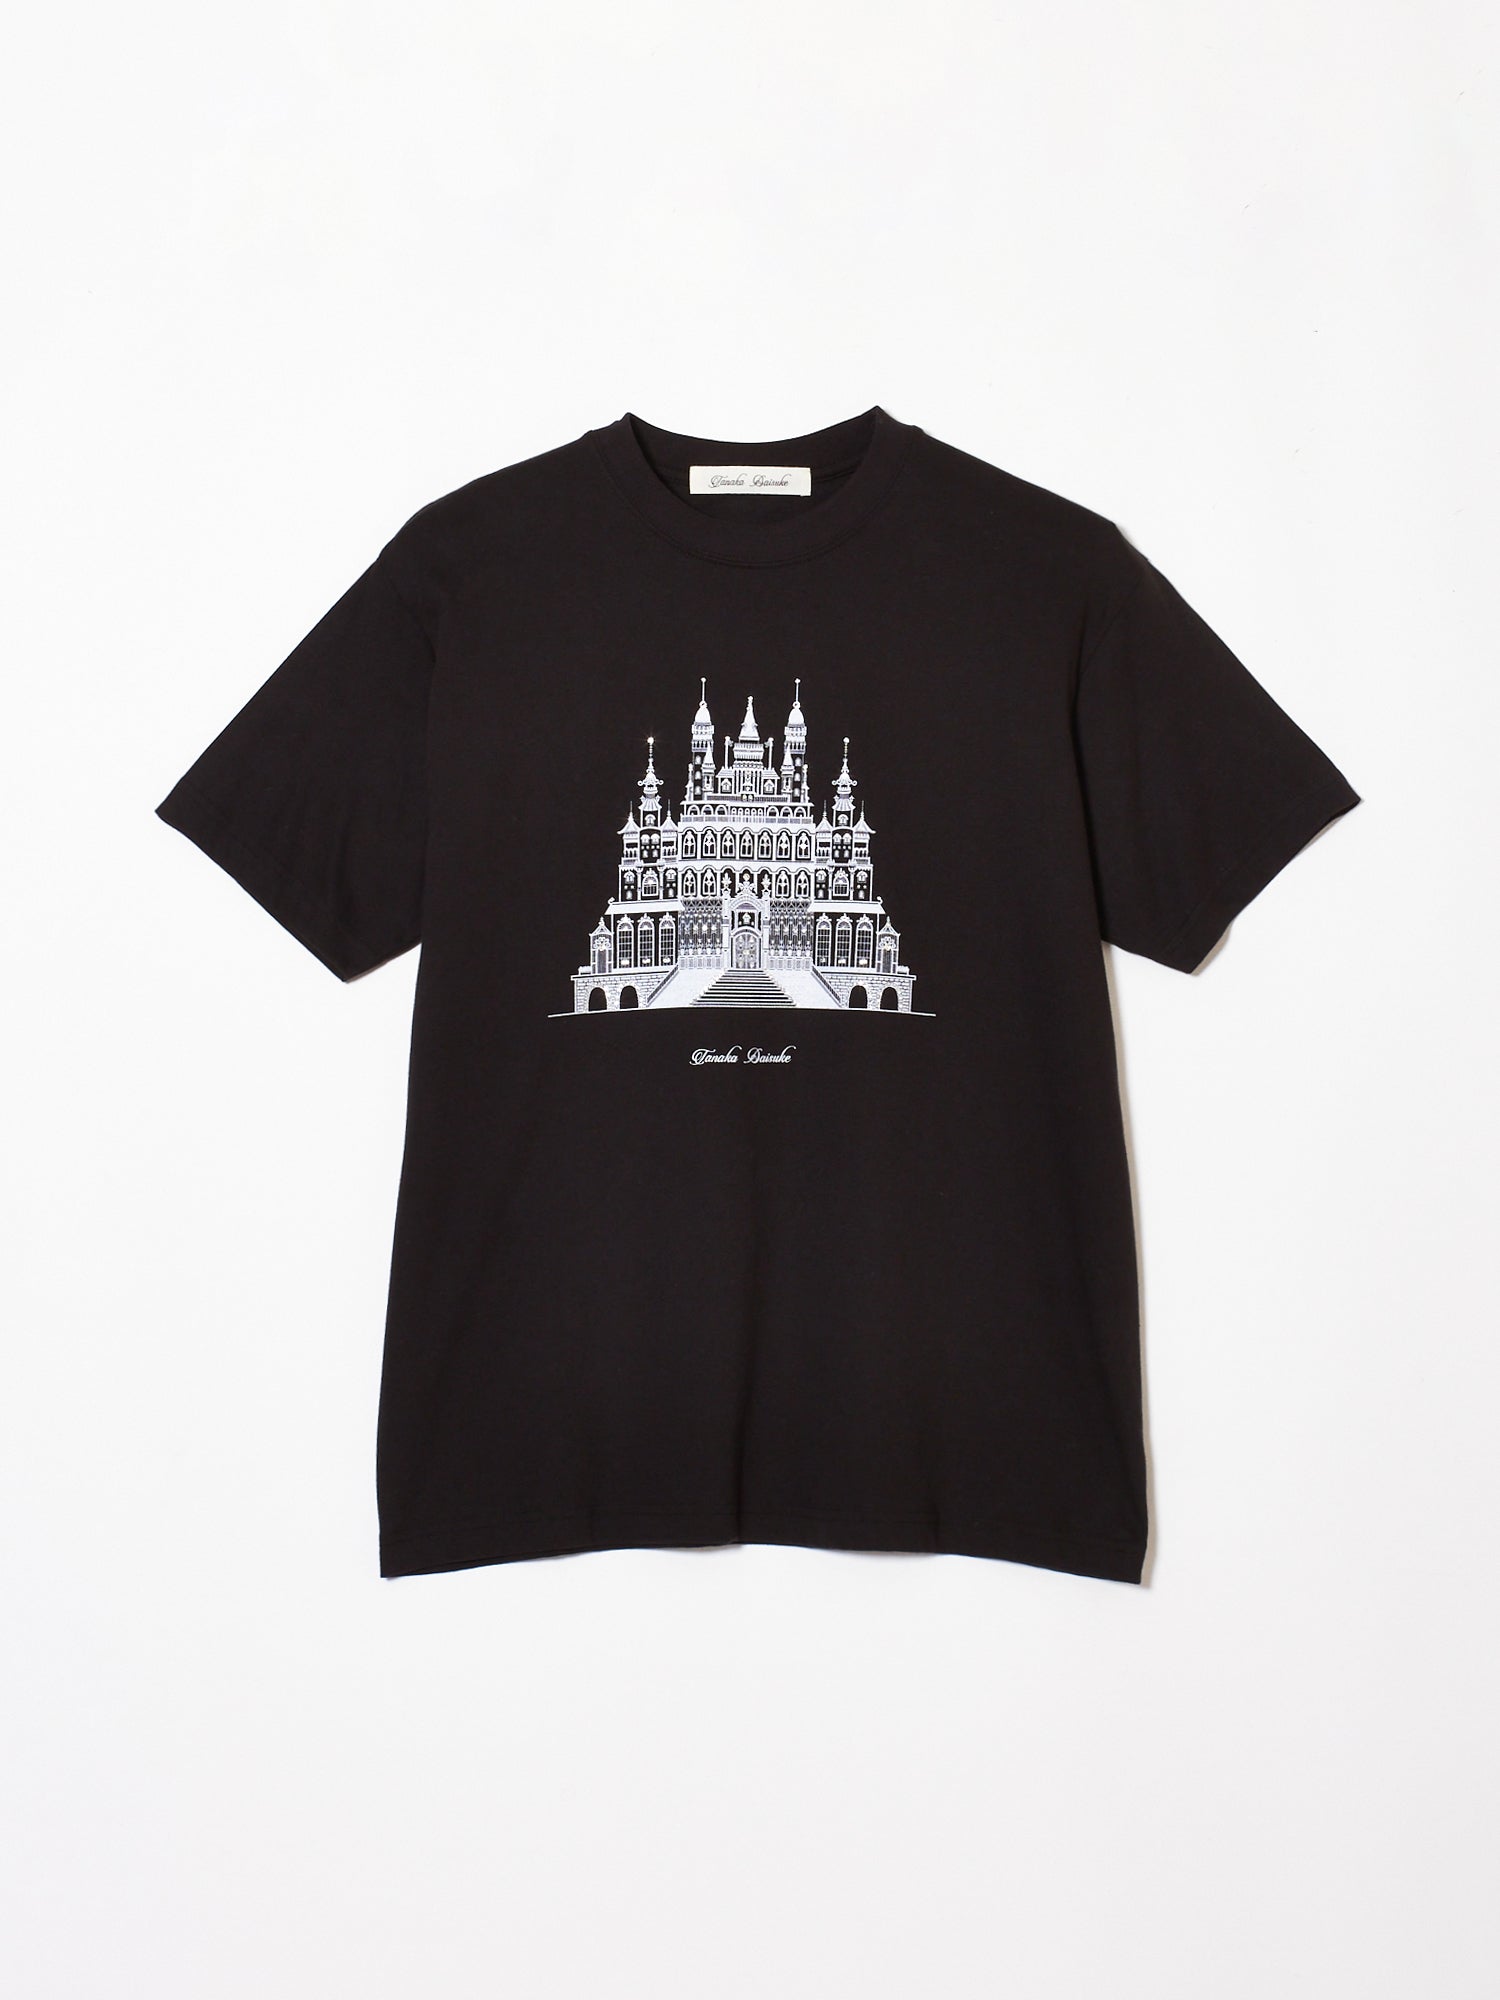 Castle T-shirt【Stock】 – tanakadaisuke